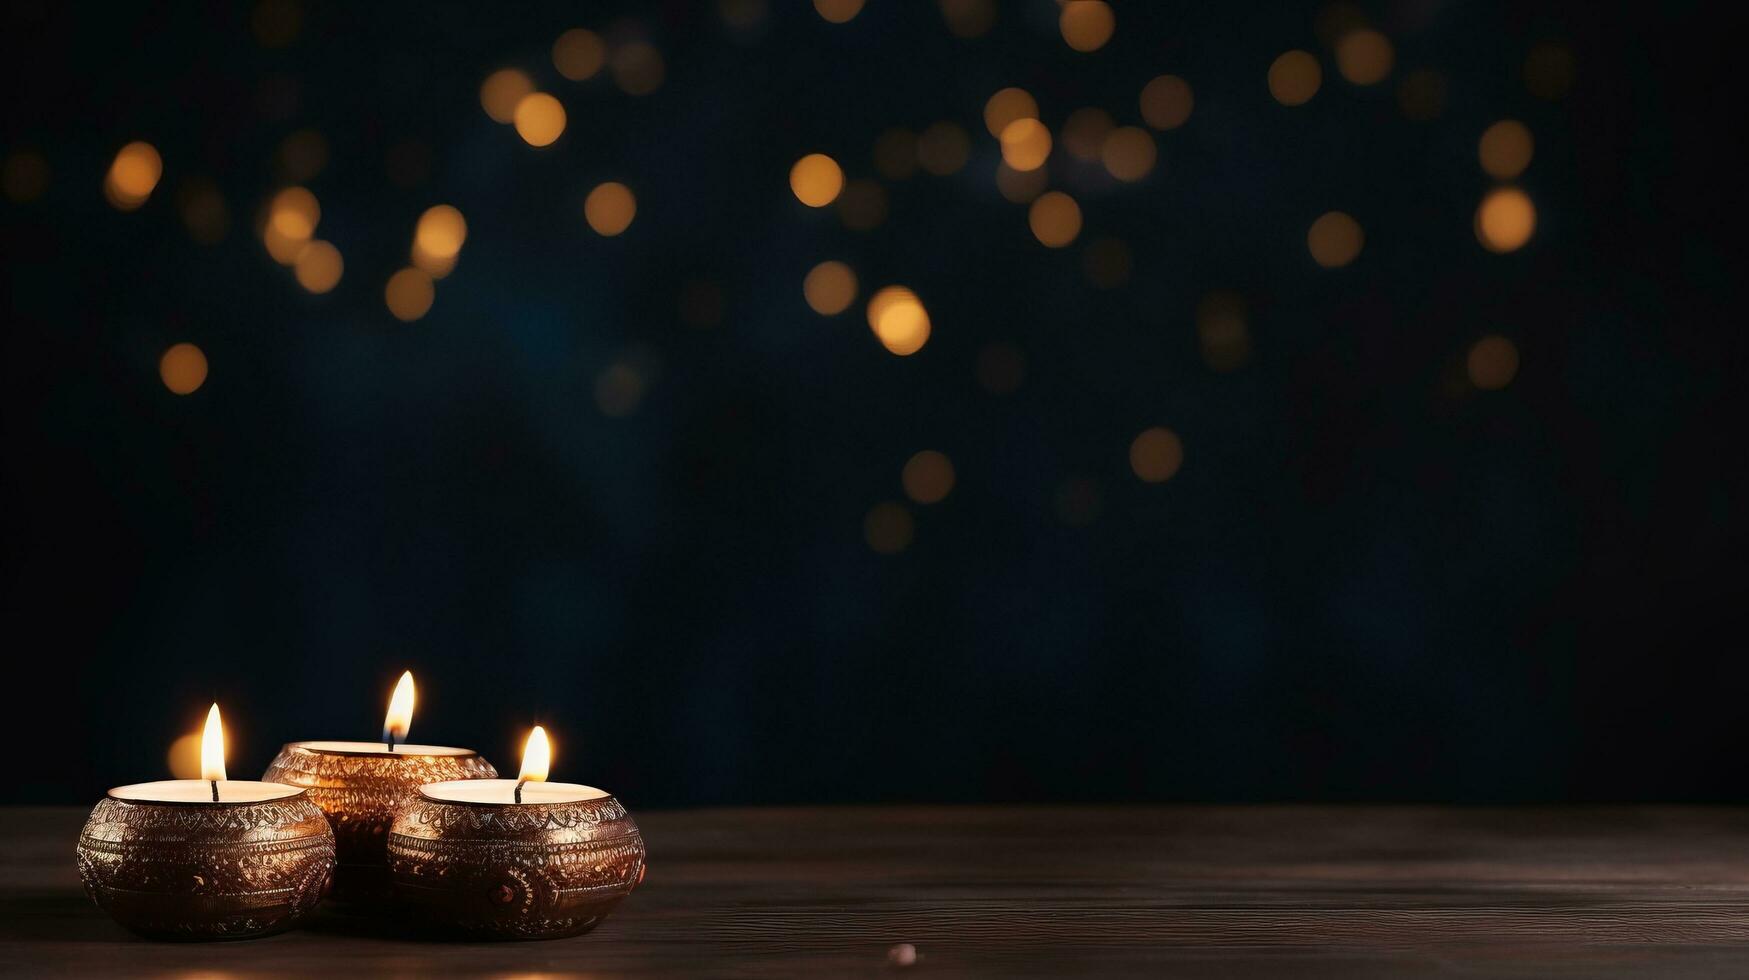 diwali festival av ljus bakgrund foto